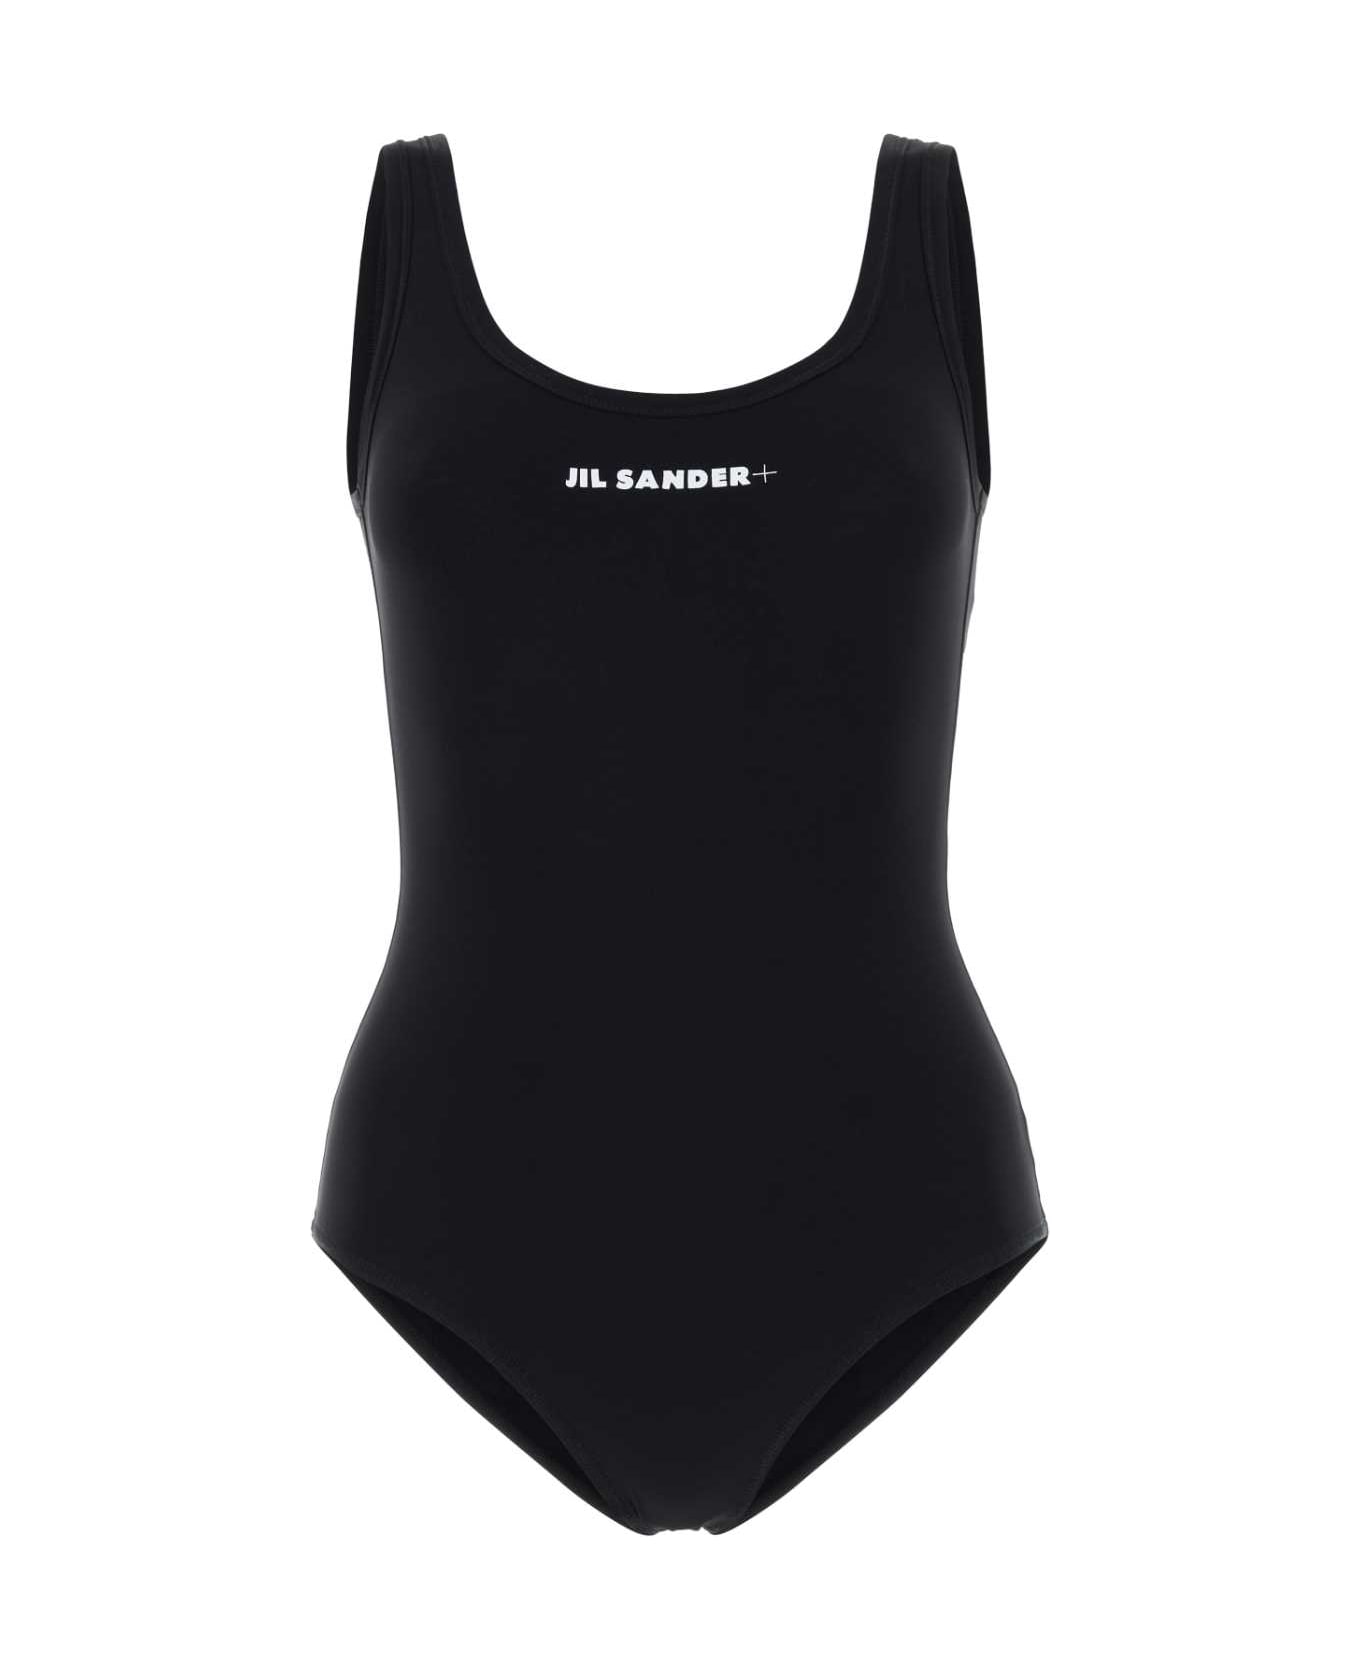 Jil Sander Black Stretch Nylon Swimsuit - 001